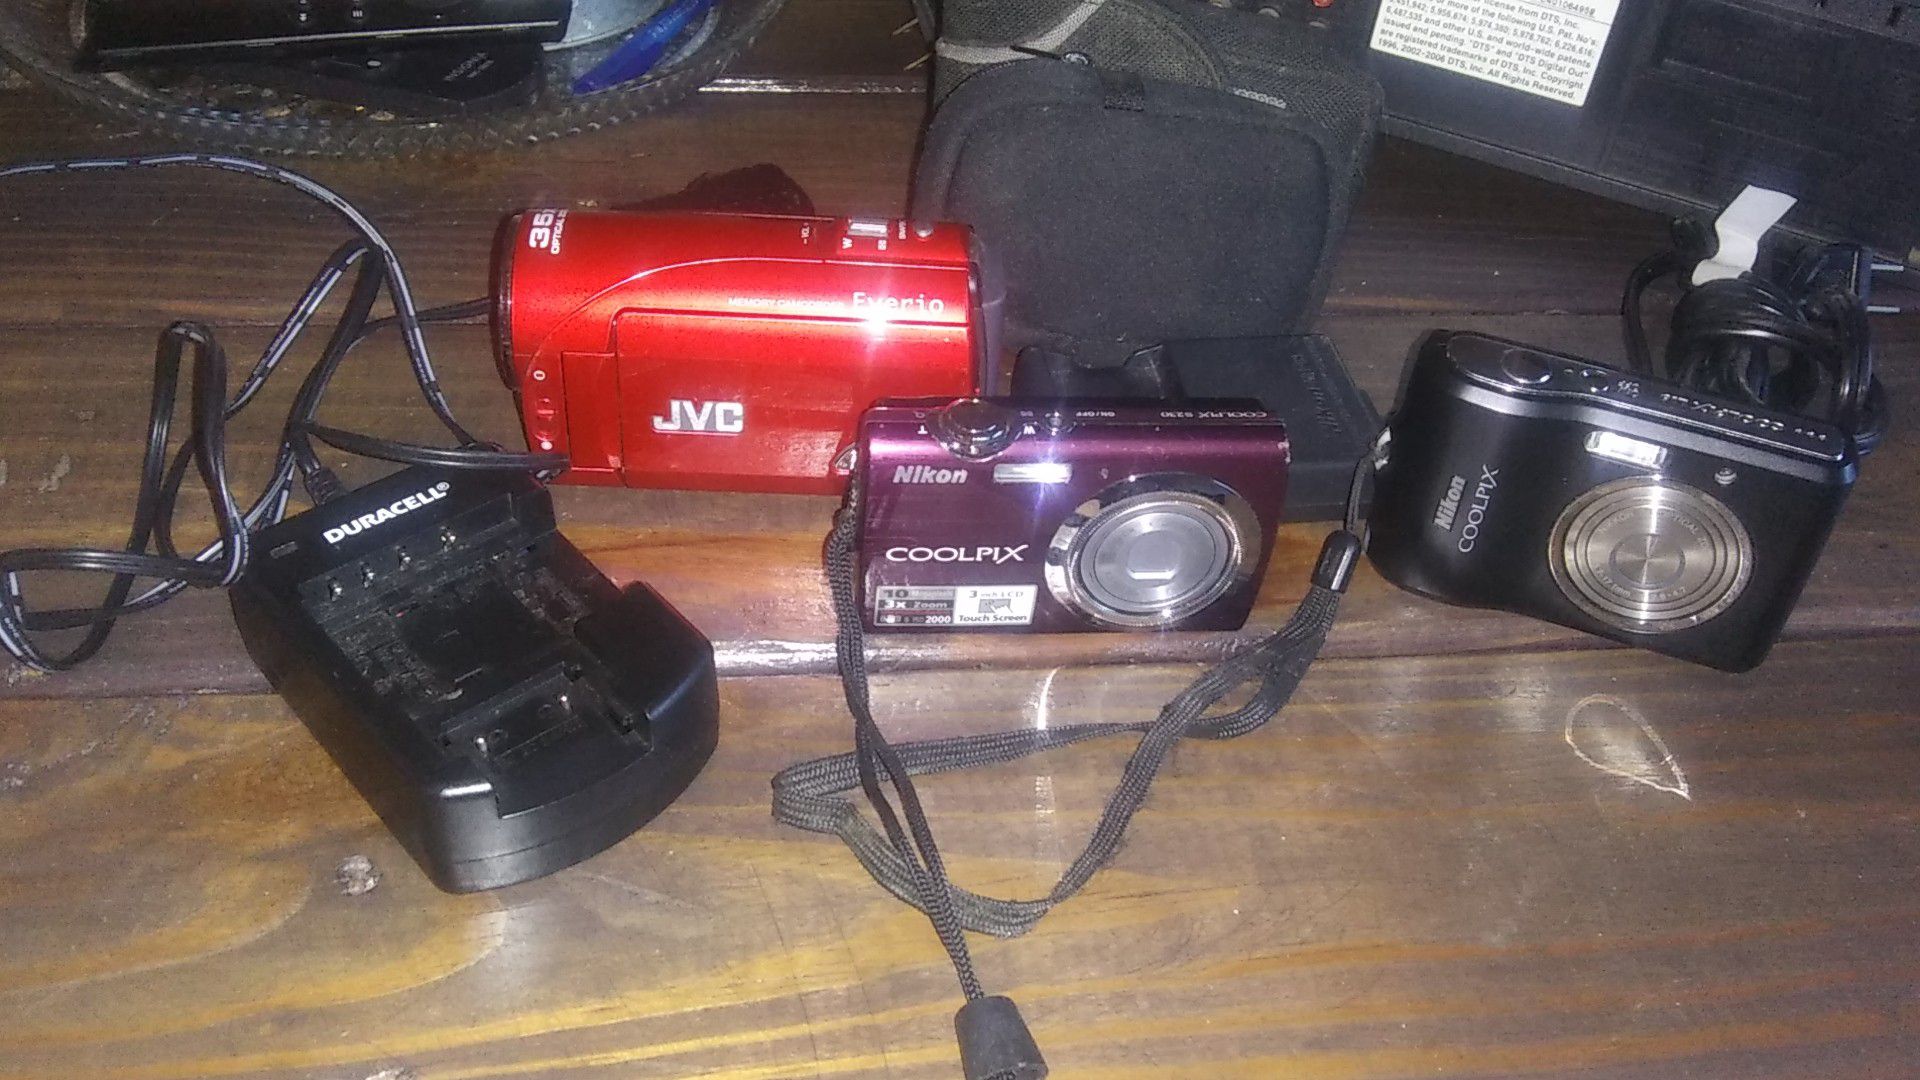 2 Nikon digital cameras and JVC camcorder